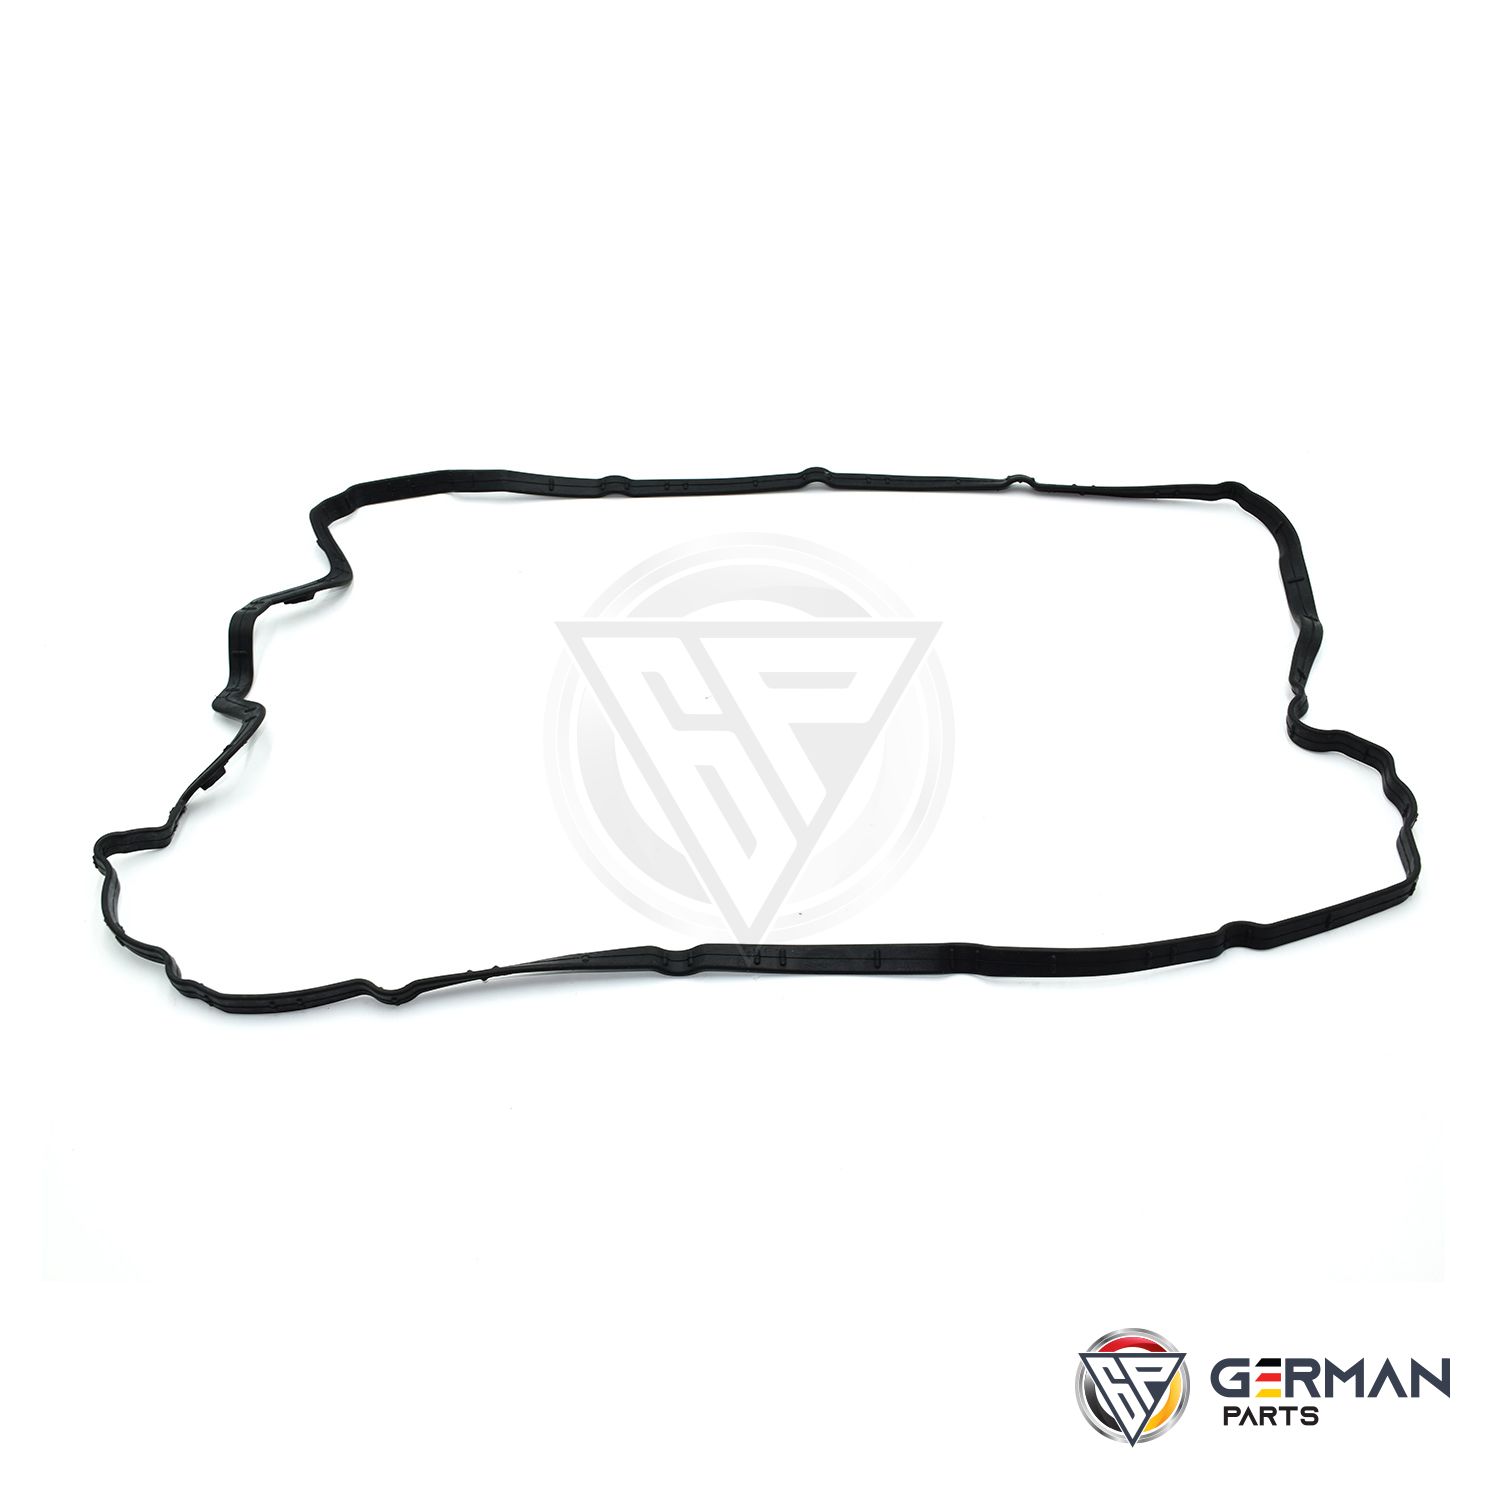 Buy Porsche Valve Cover Gasket 94810593103 - German Parts